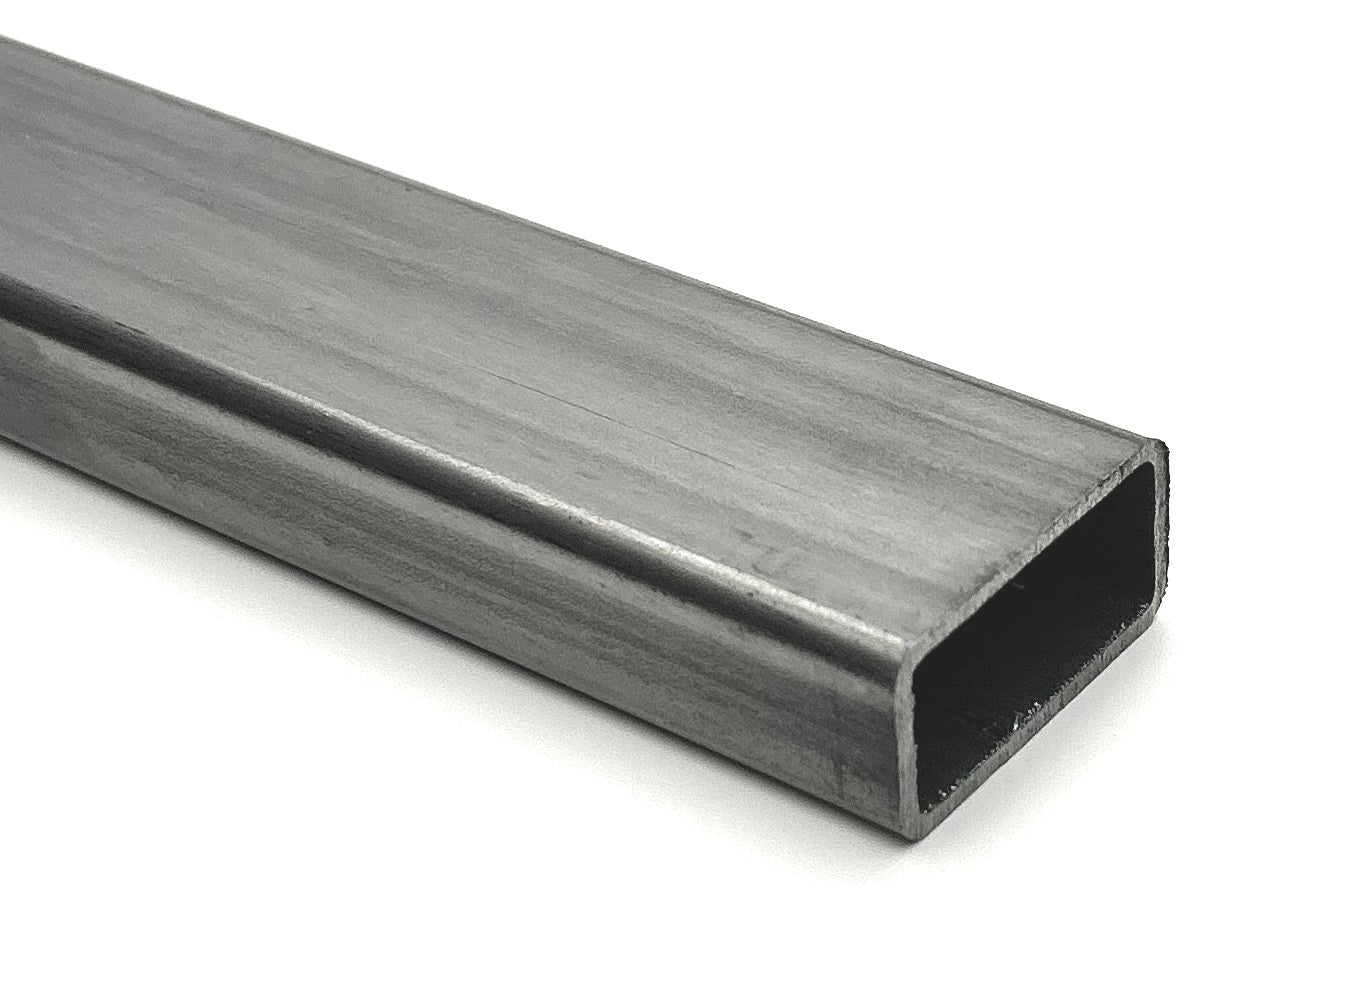 Sort stål - Rektangulært rør 40x30mm